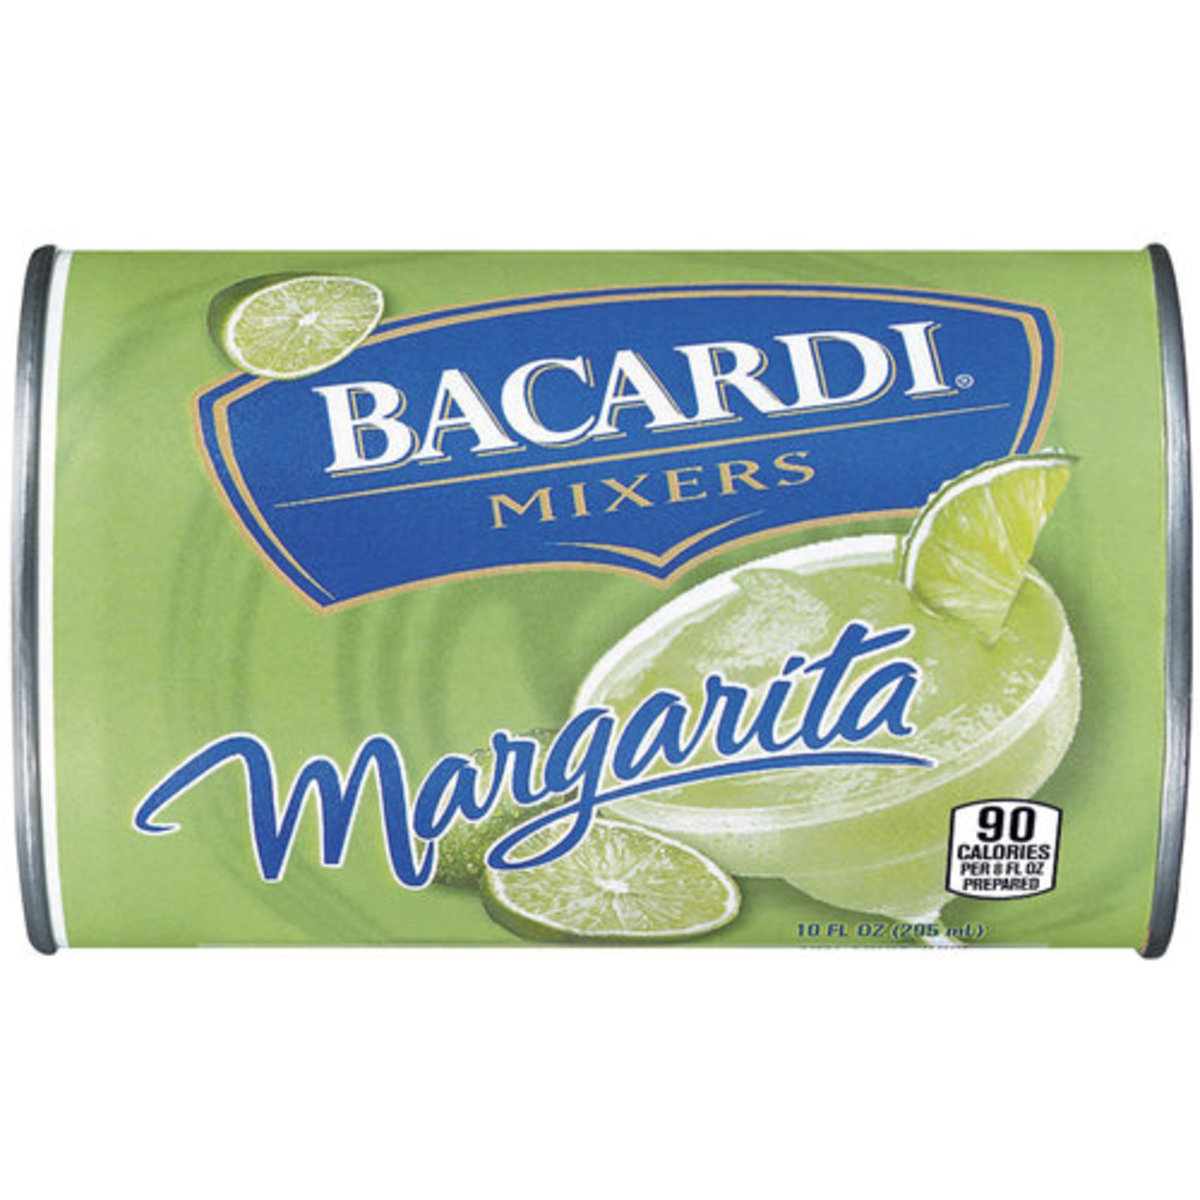 bacardi mixers